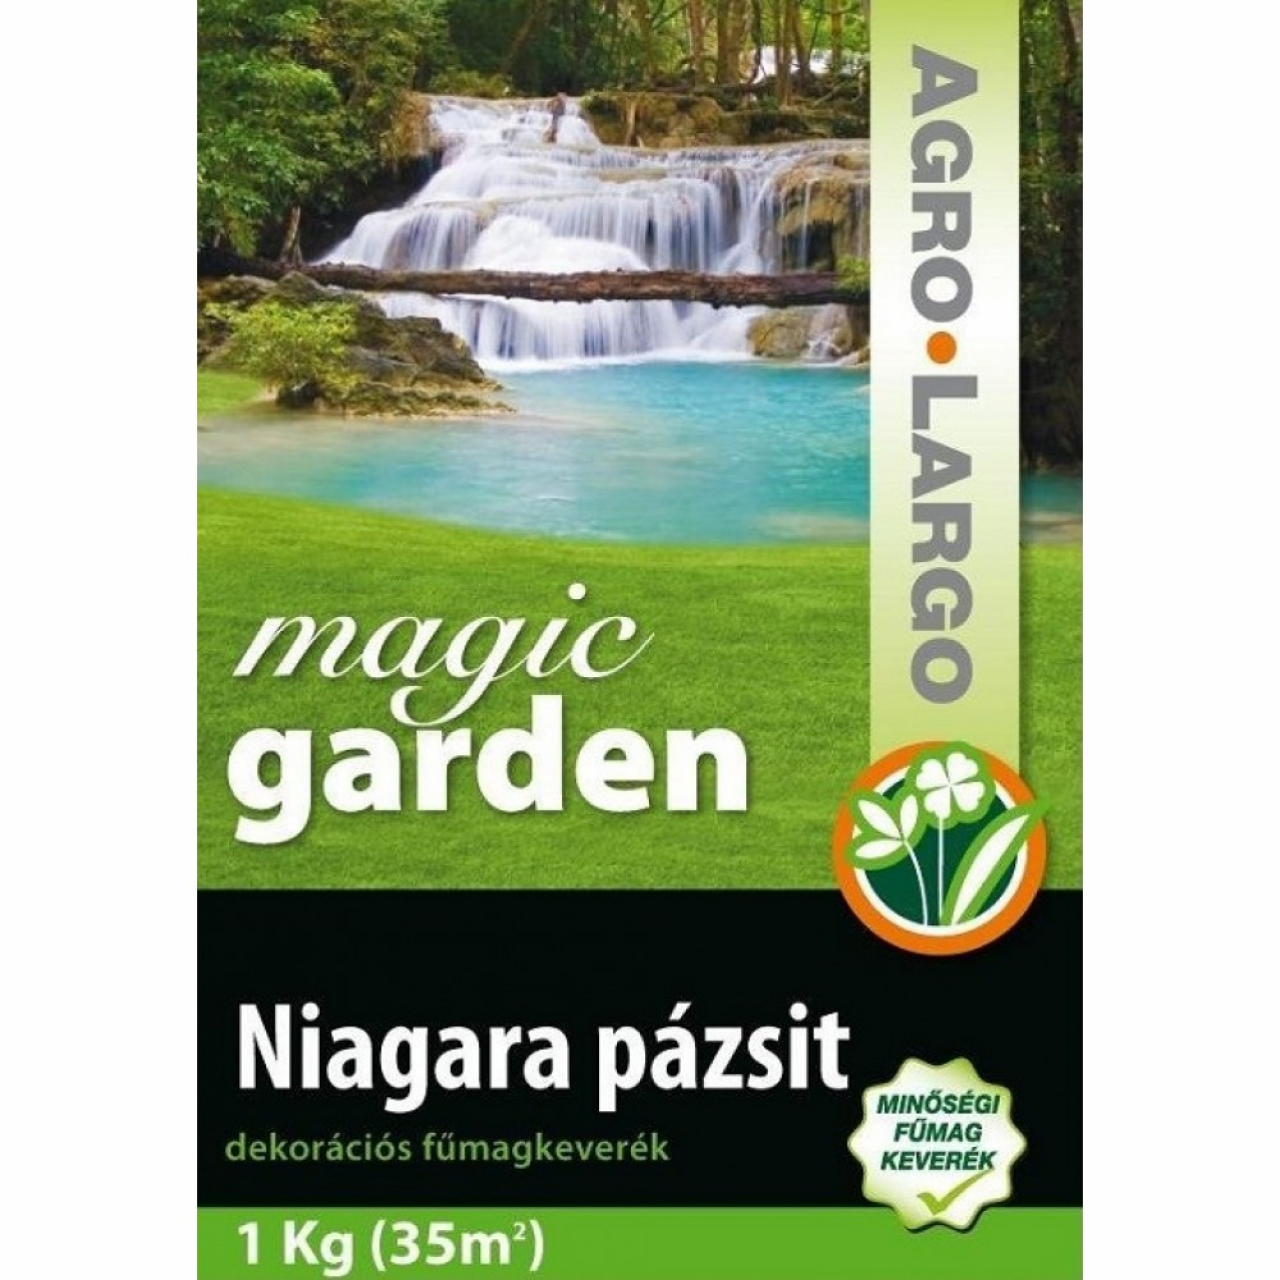 Agro Largo Magic Garden – Niagara Pázsit fűmagkeverék 1 kg 5998382101109